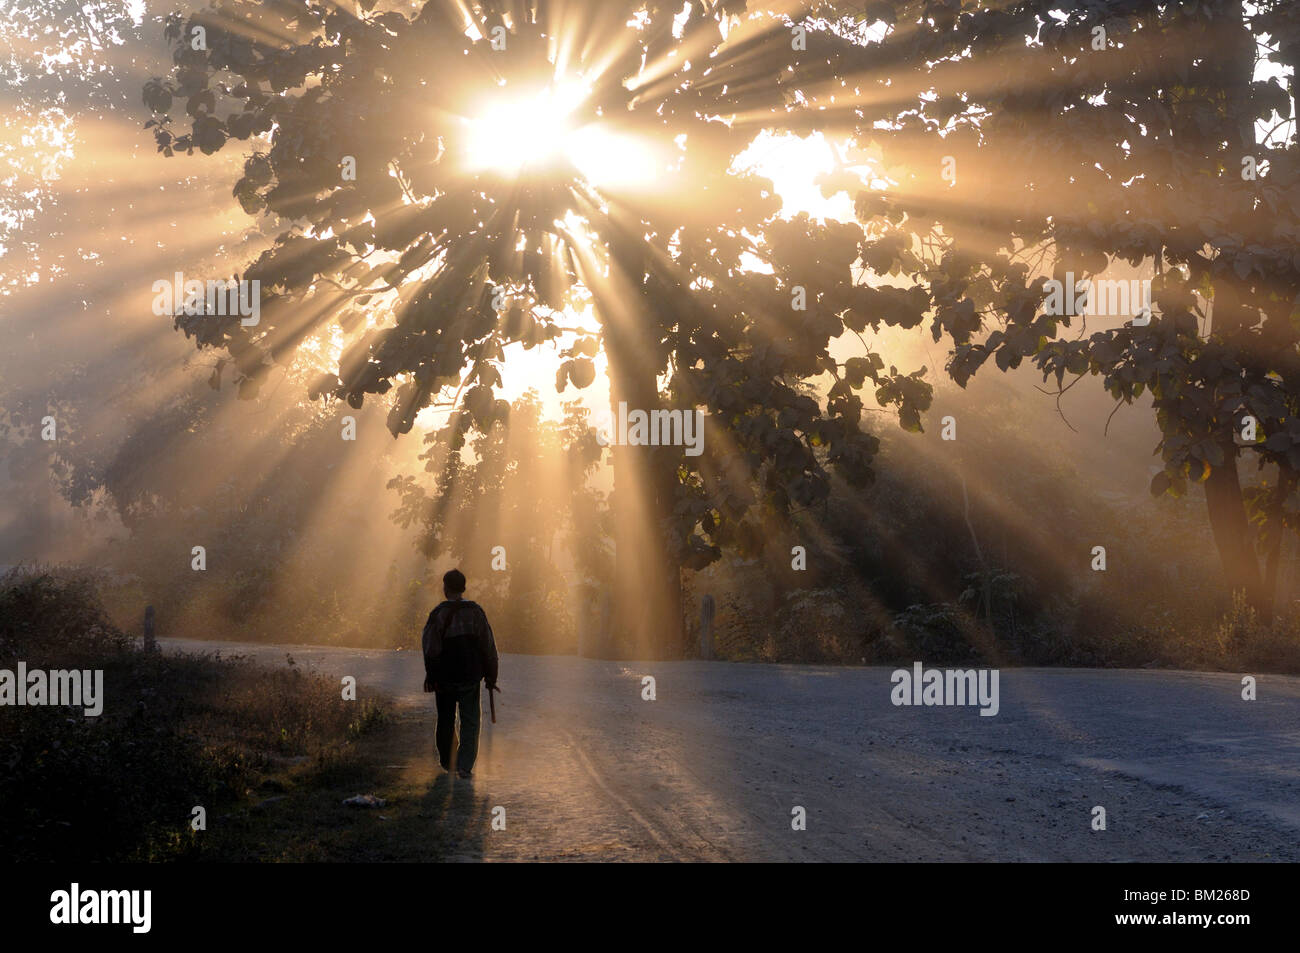 Man walking along a street with sun rays shining through a tree, Highlands, Myanmar (Burma) Stock Photo